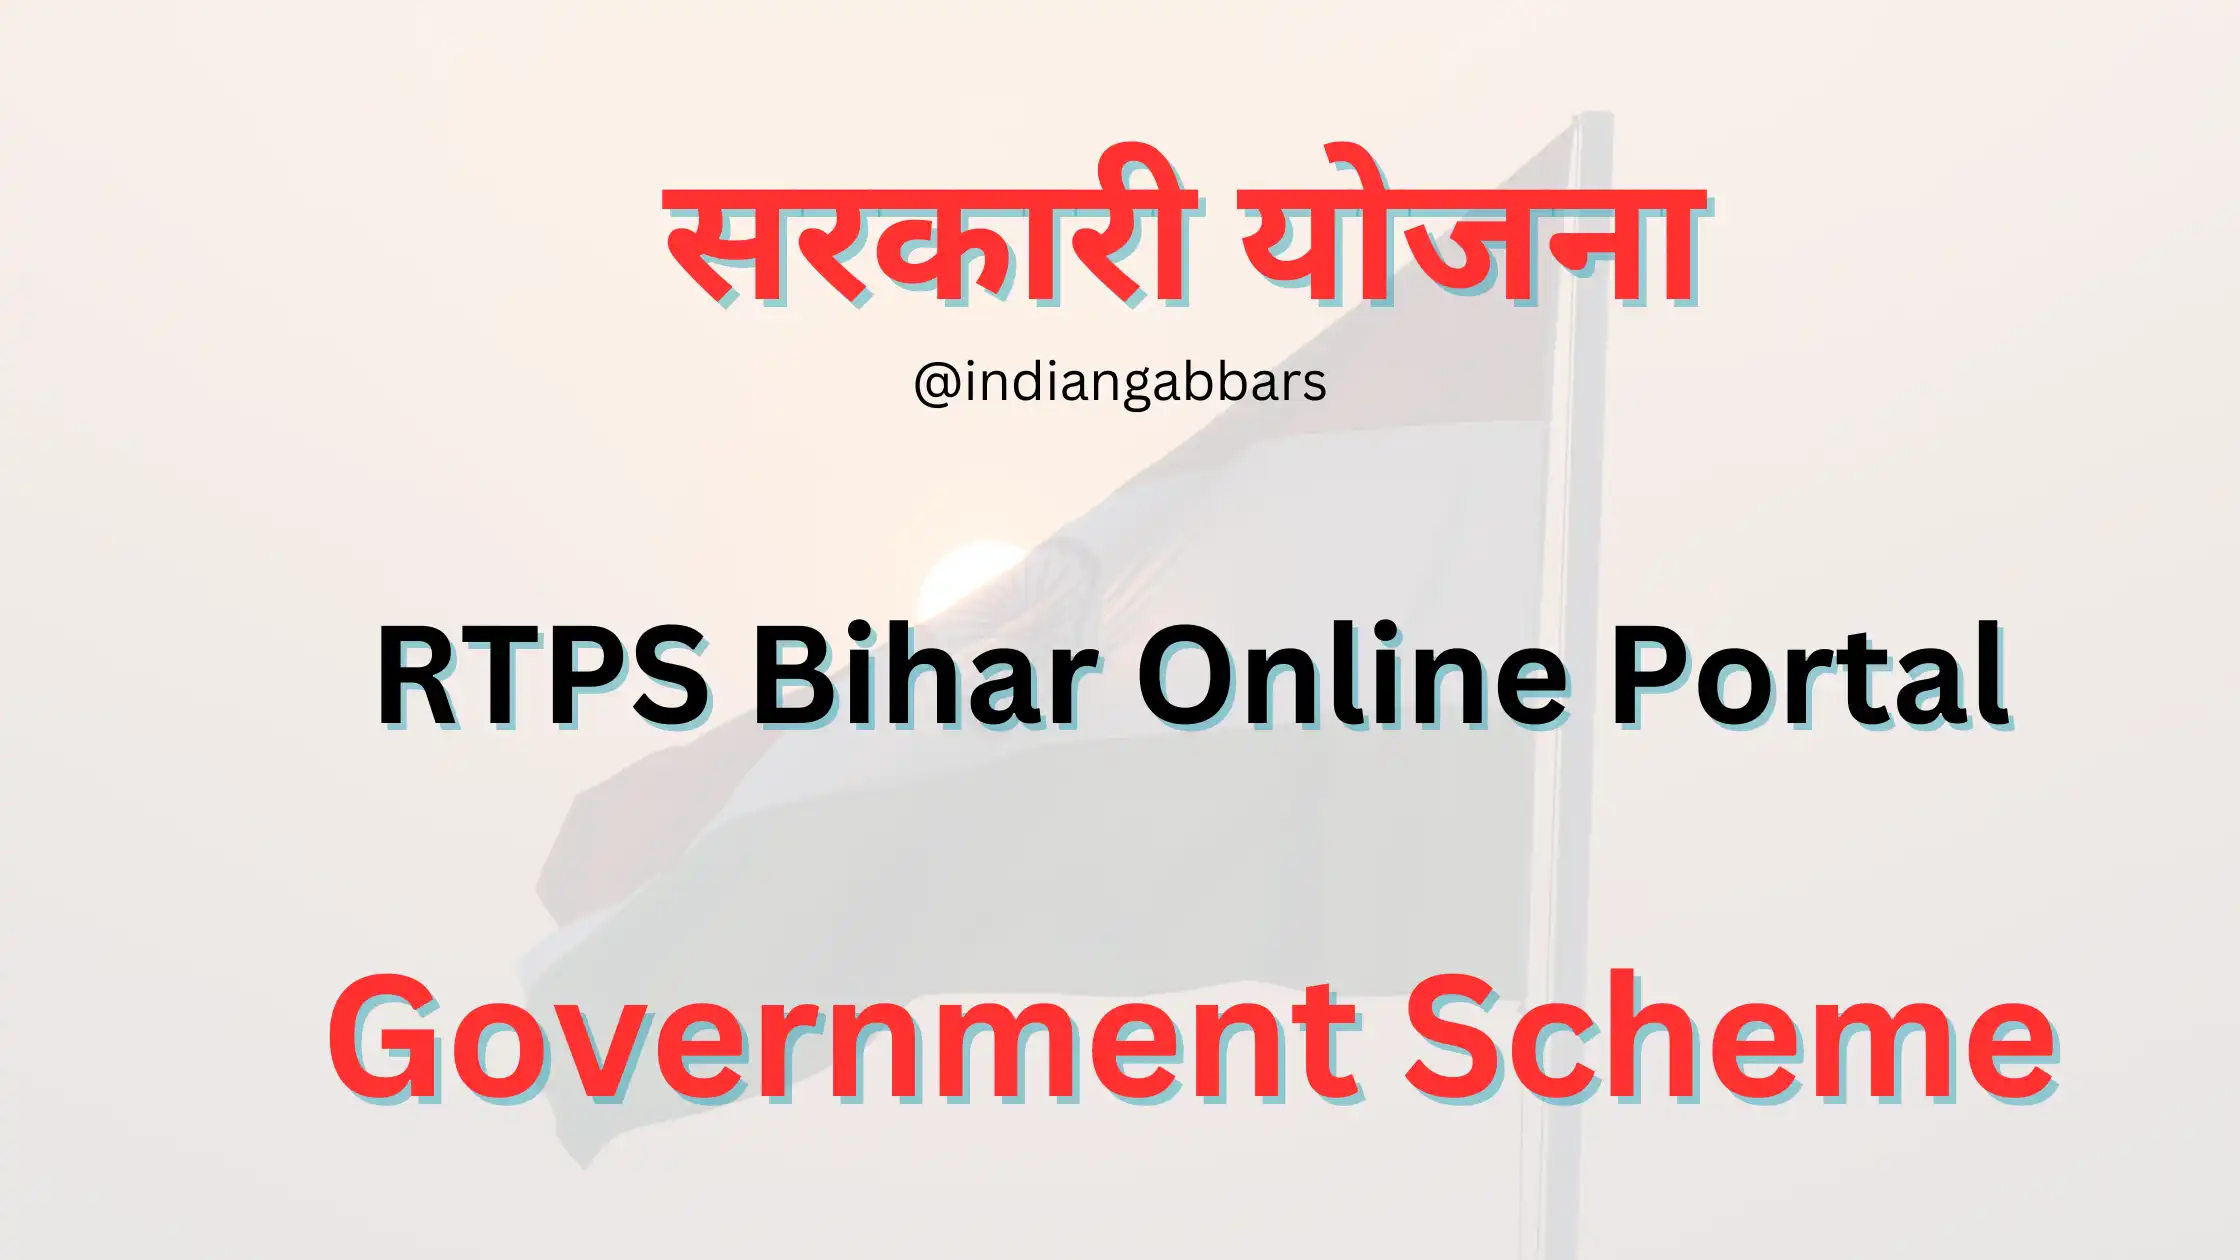 Simplify Your Bihar Travel with BiharTour's Guide to RTPS Bihar